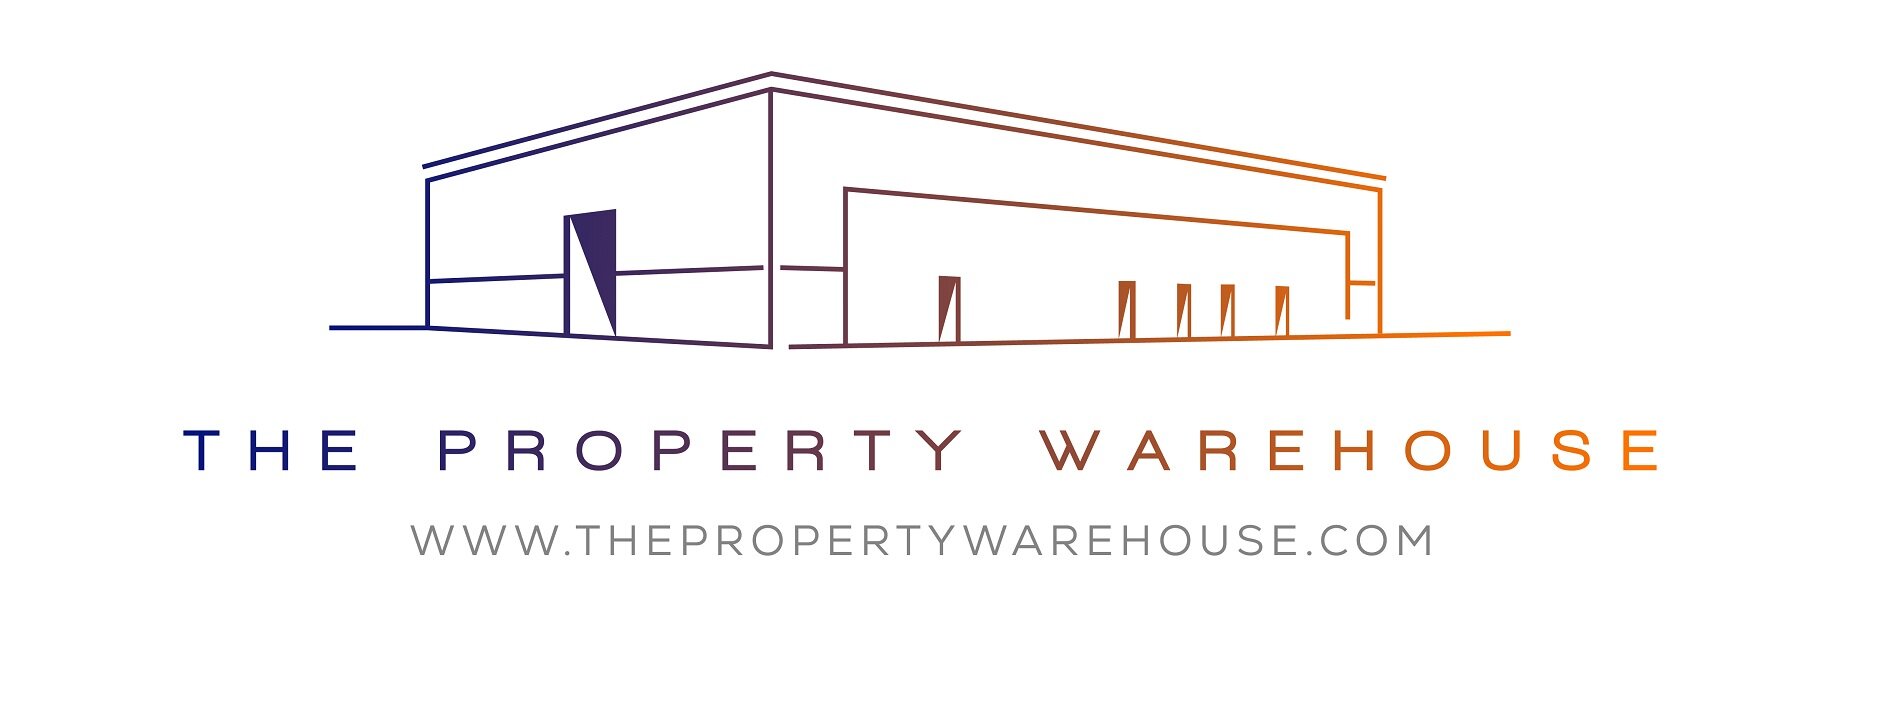 The Property Warehouse logo